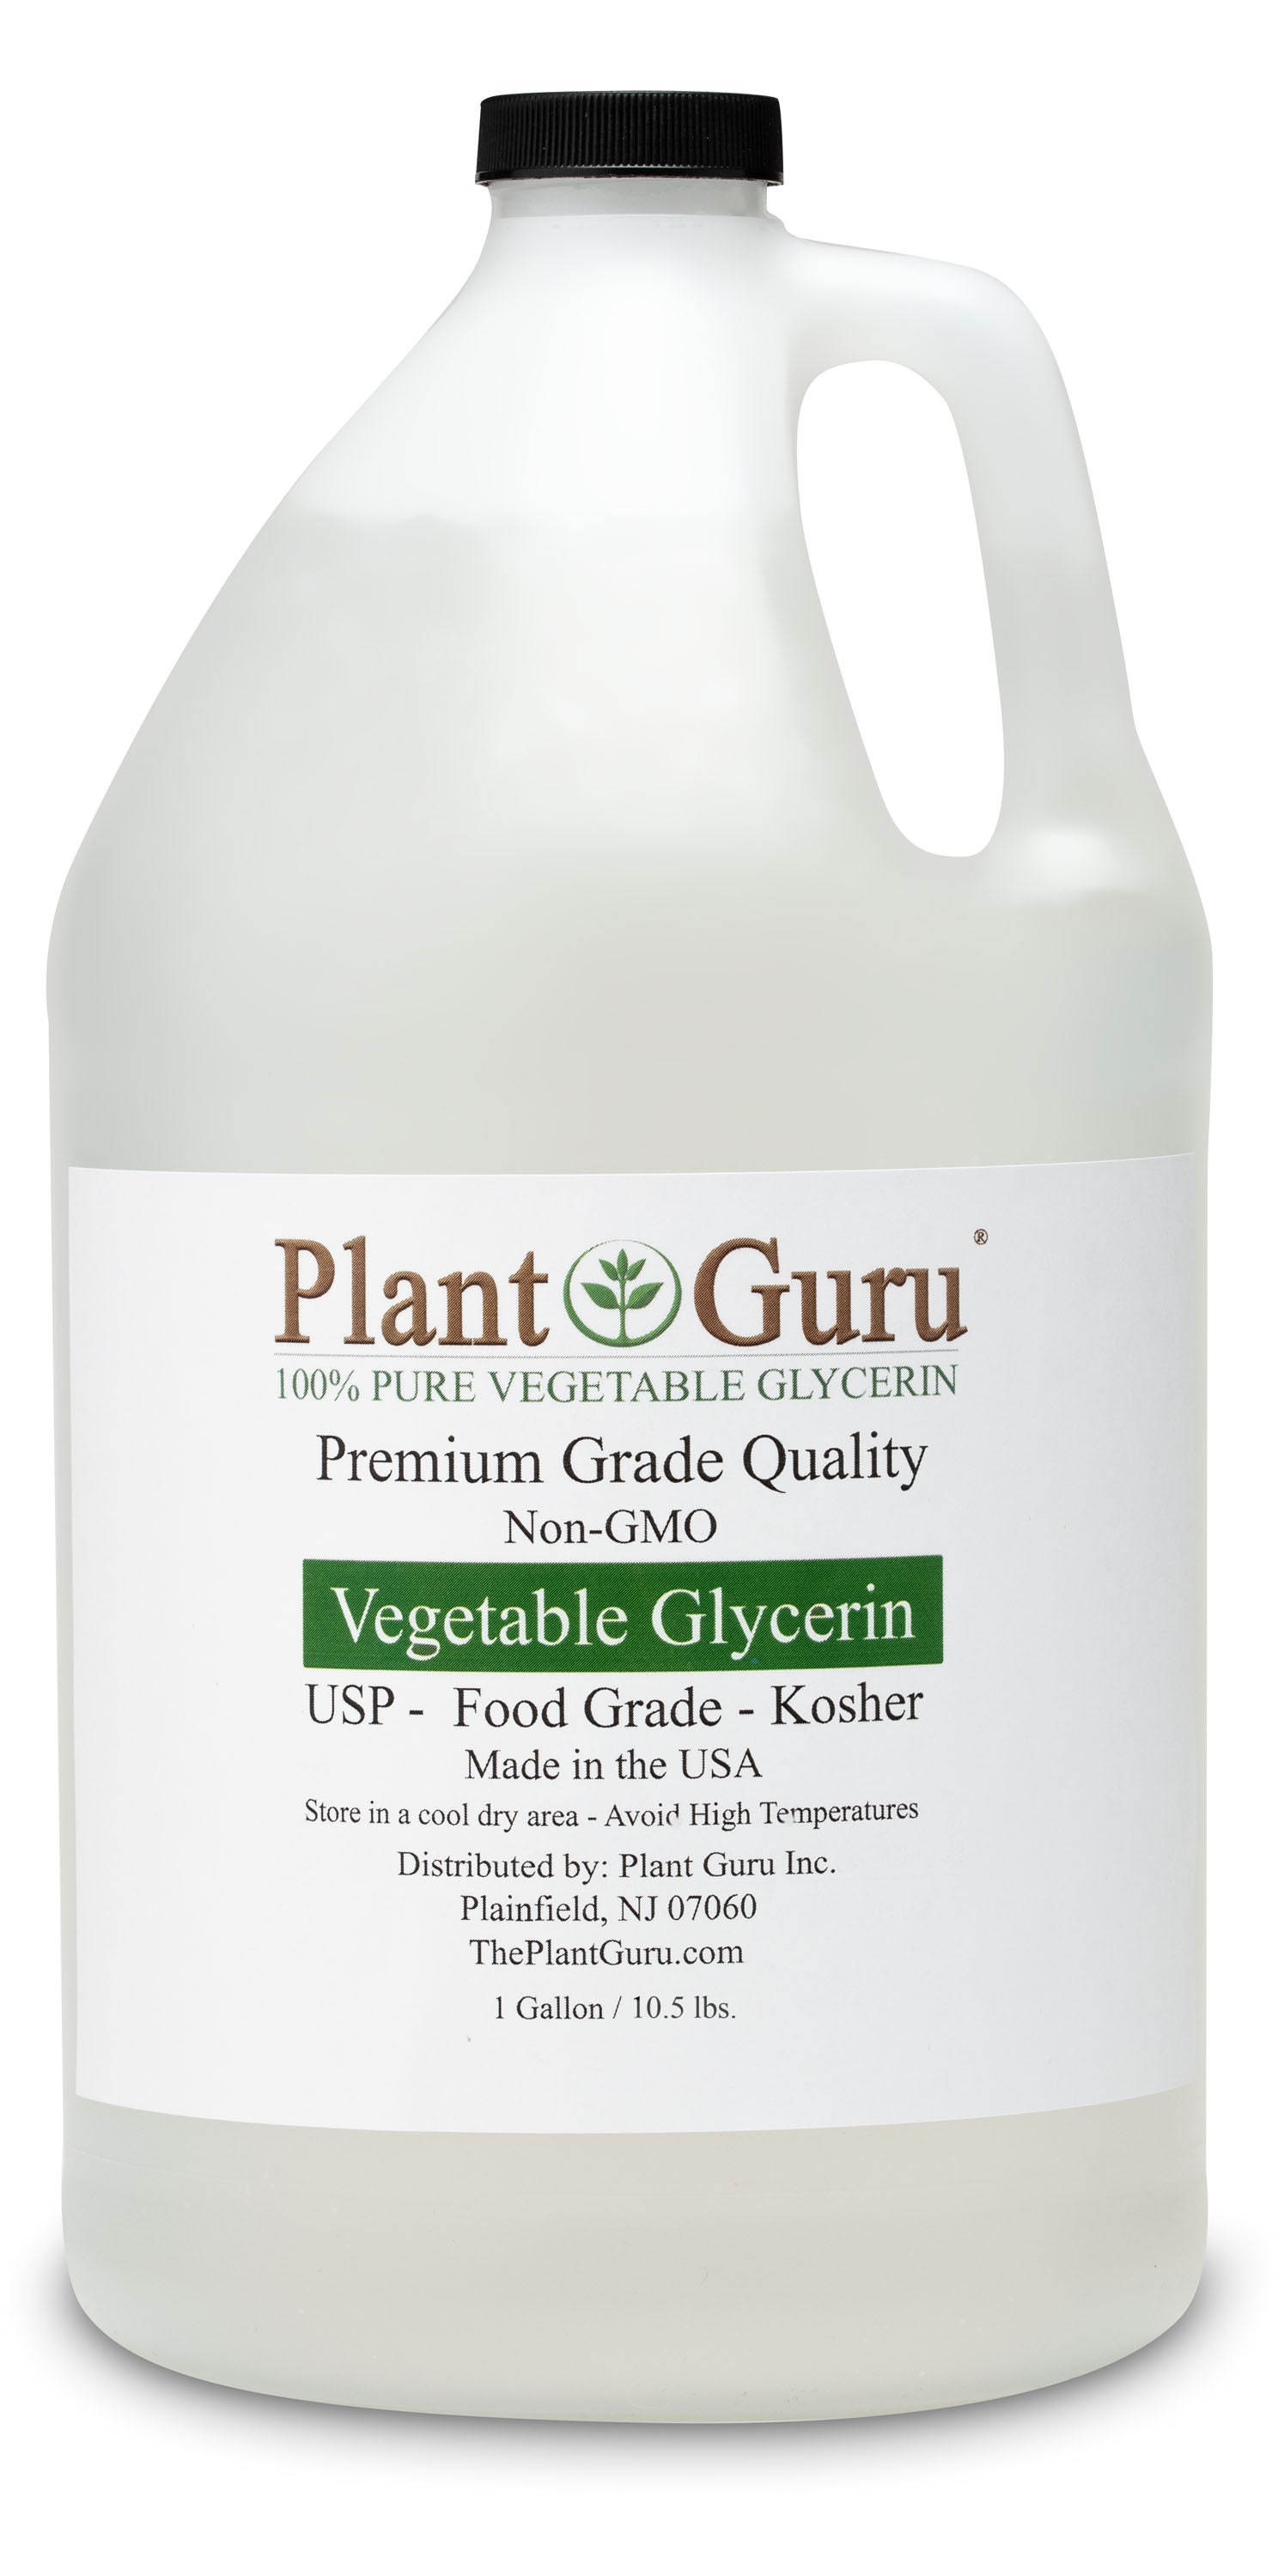 De La Cruz Vegetable Glycerin, 100% Pure Liquid Glycerine USP Grade for  Hair, Skin and DYI Projects 2 FL. OZ.